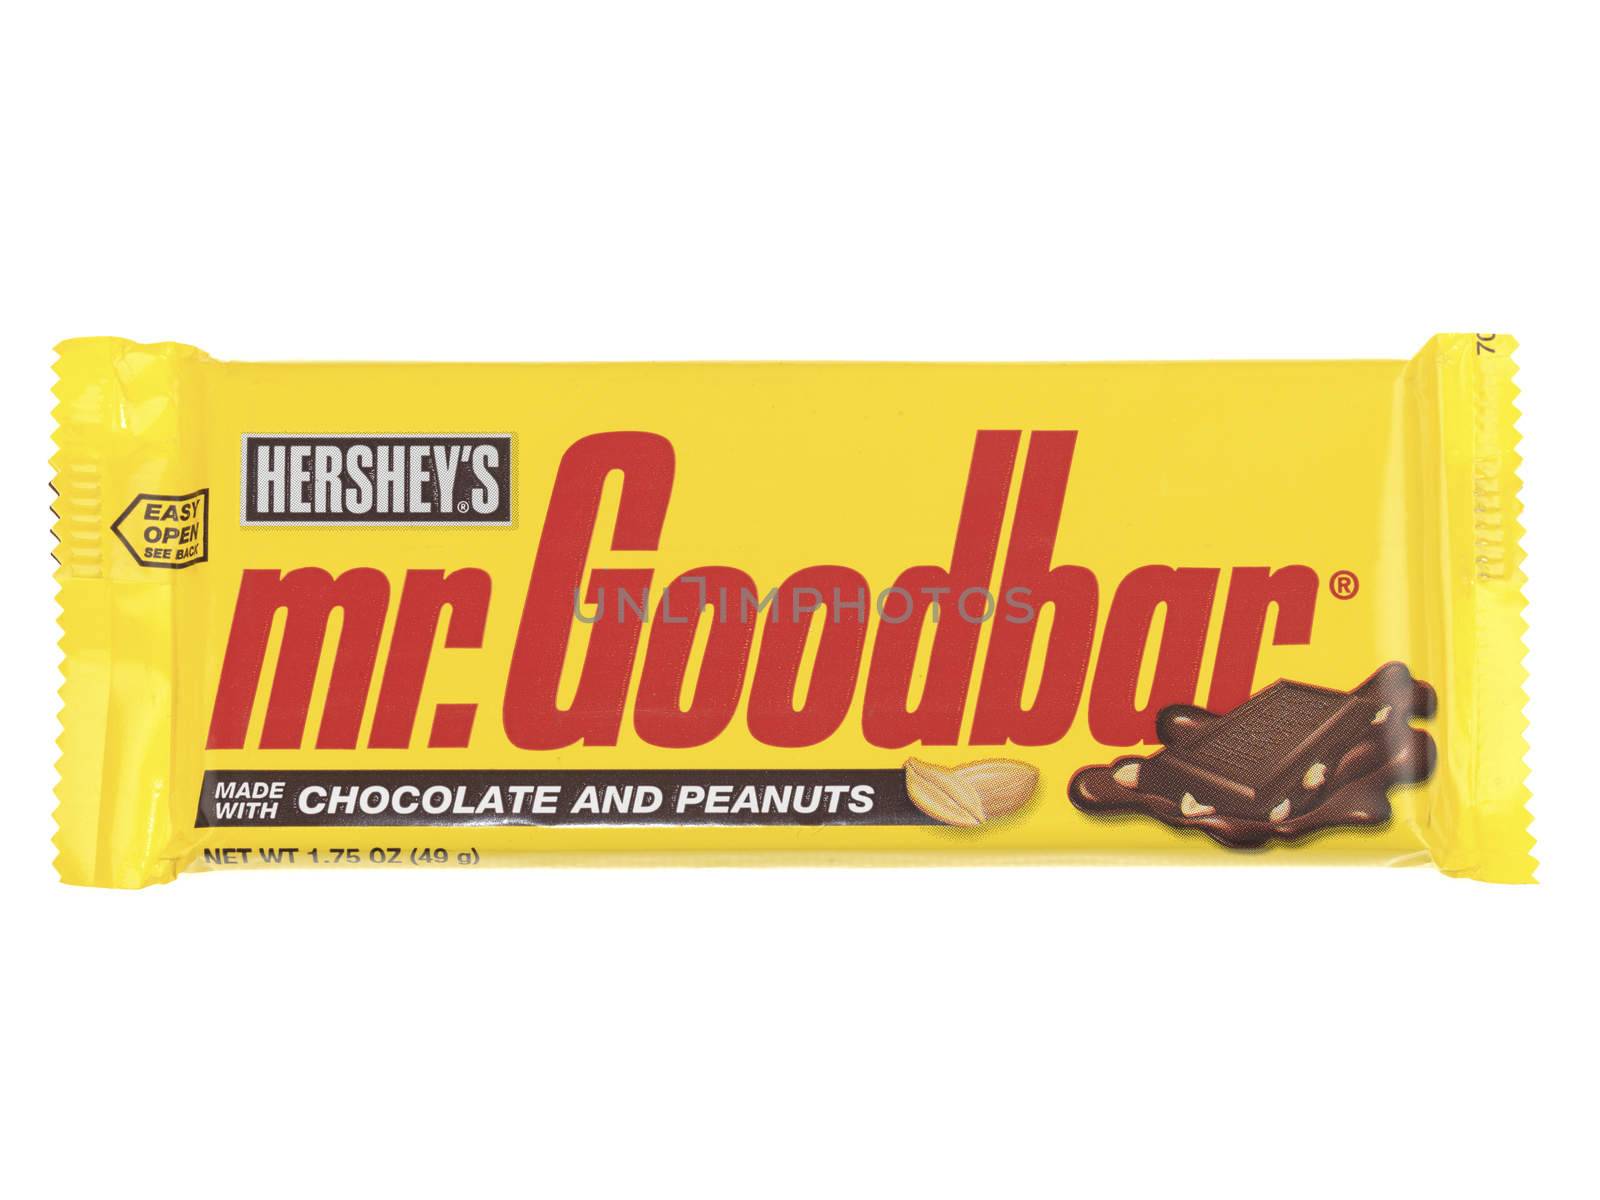 Hershey's Chocolate and Peanut Bar